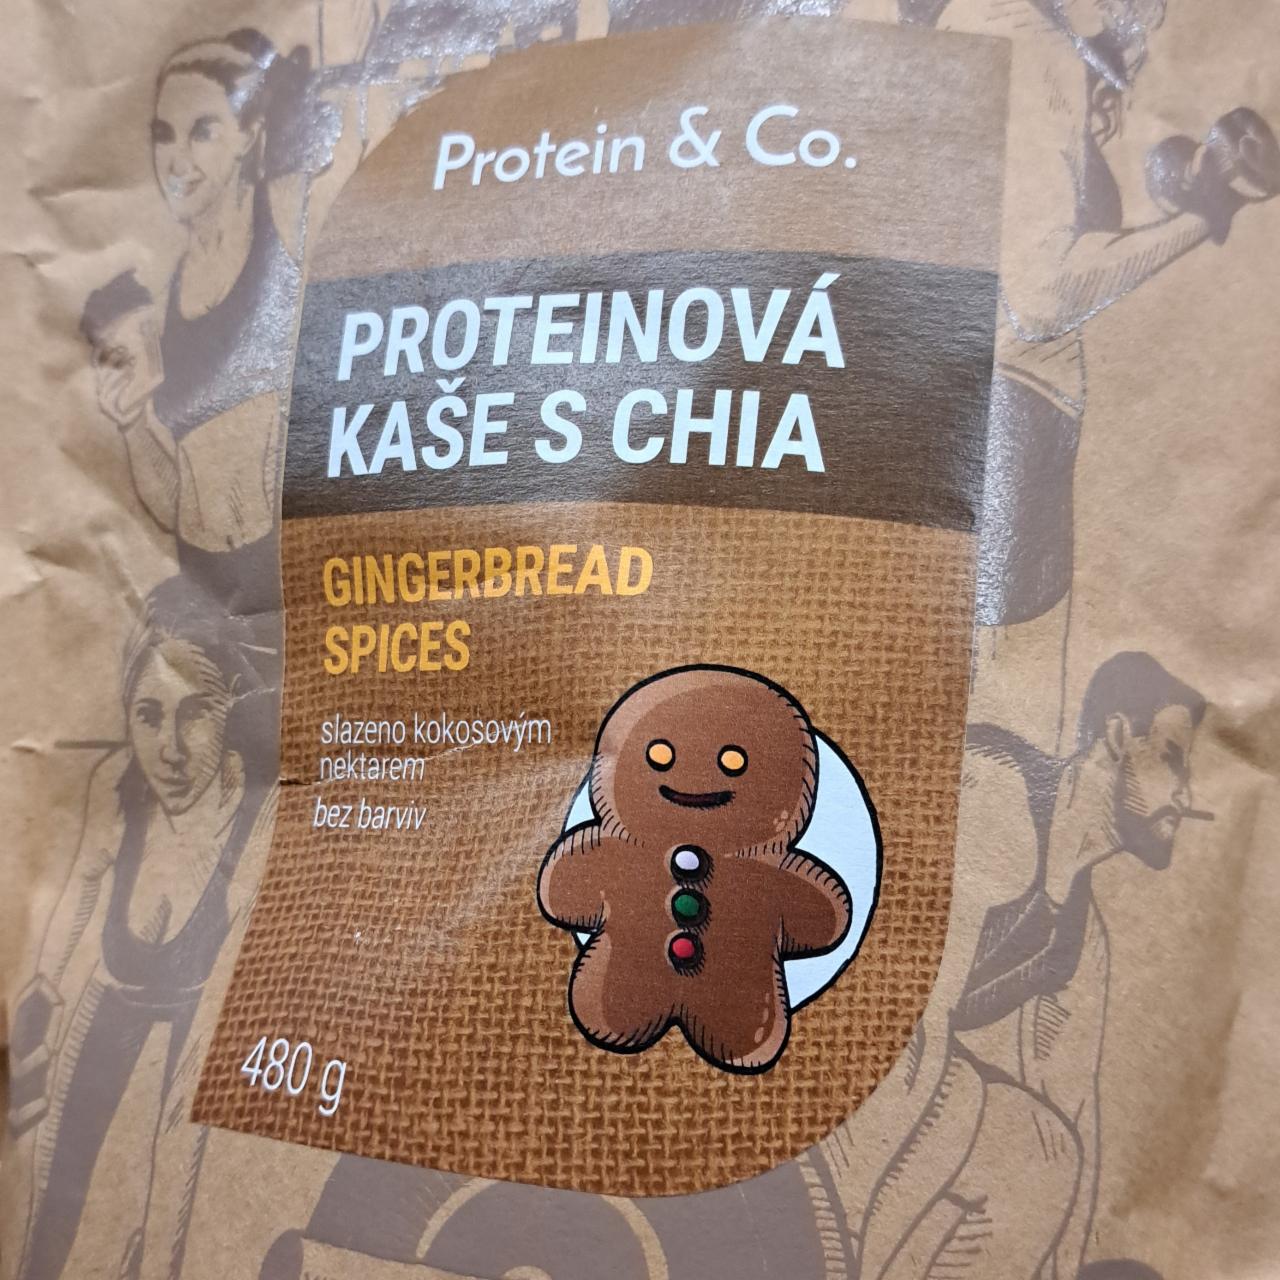 Fotografie - Proteinová kaše s chia Gingerbread spices Protein & Co.